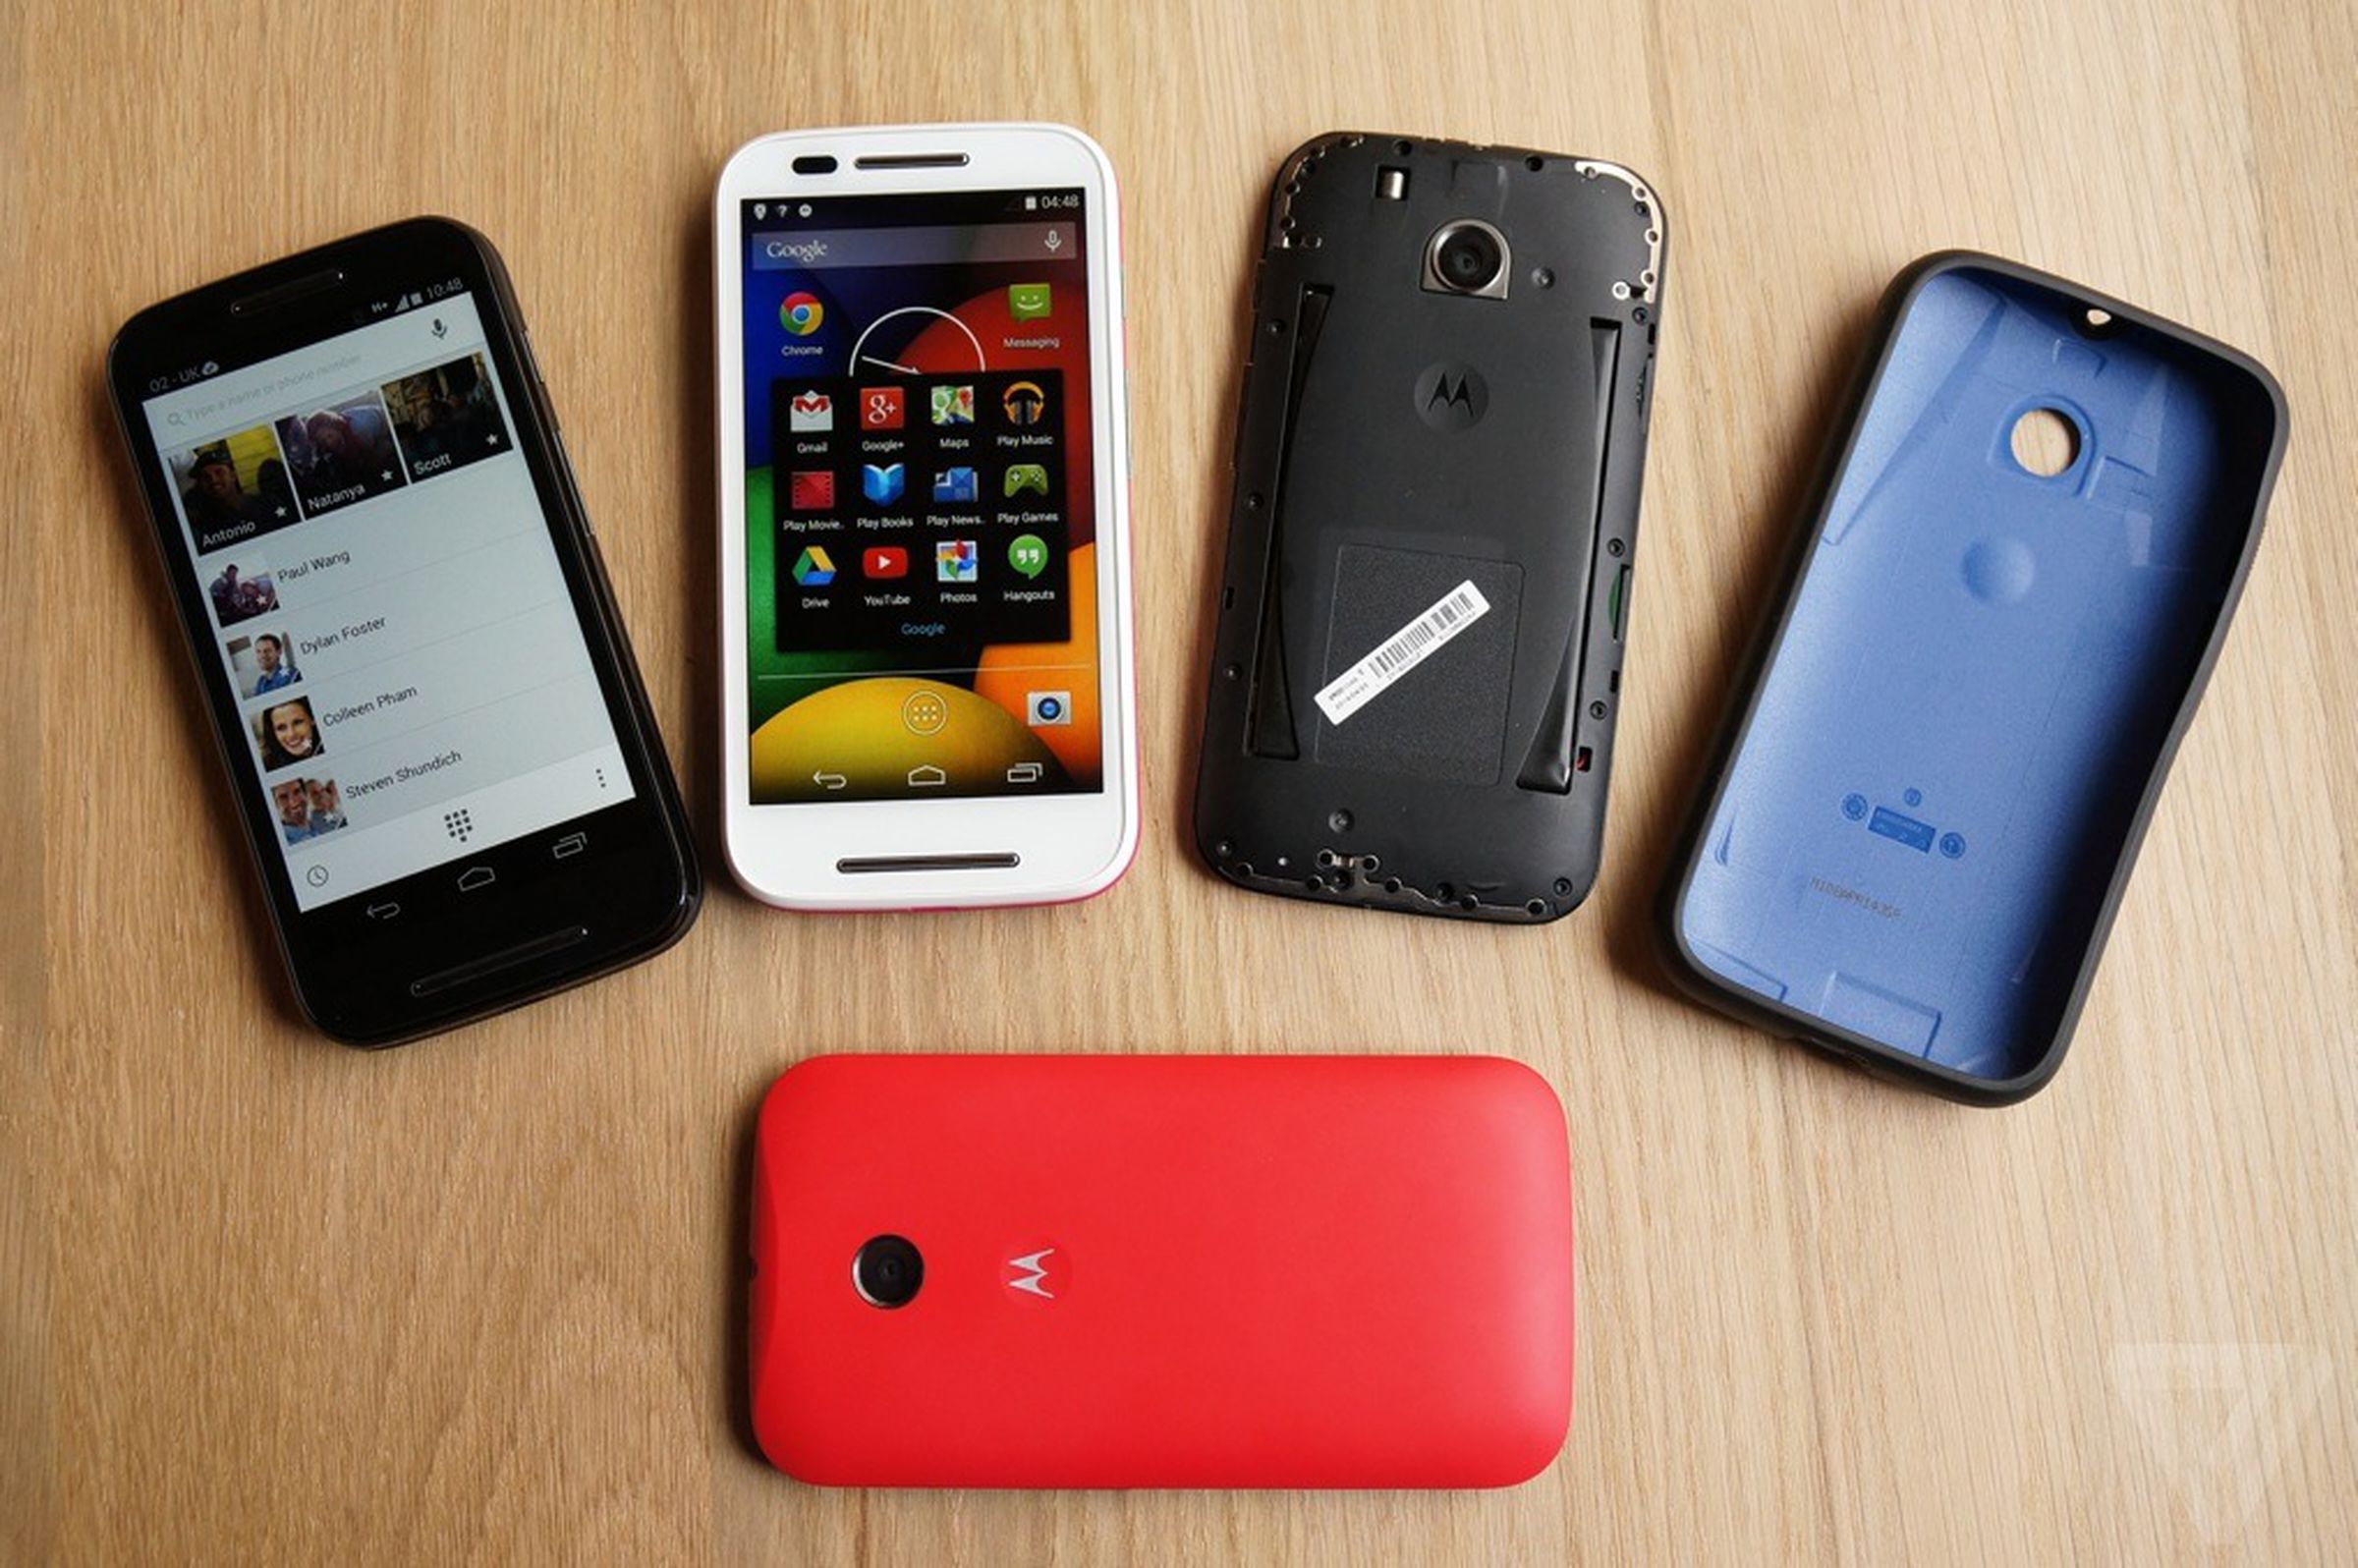 Motorola Moto E hands-on pictures